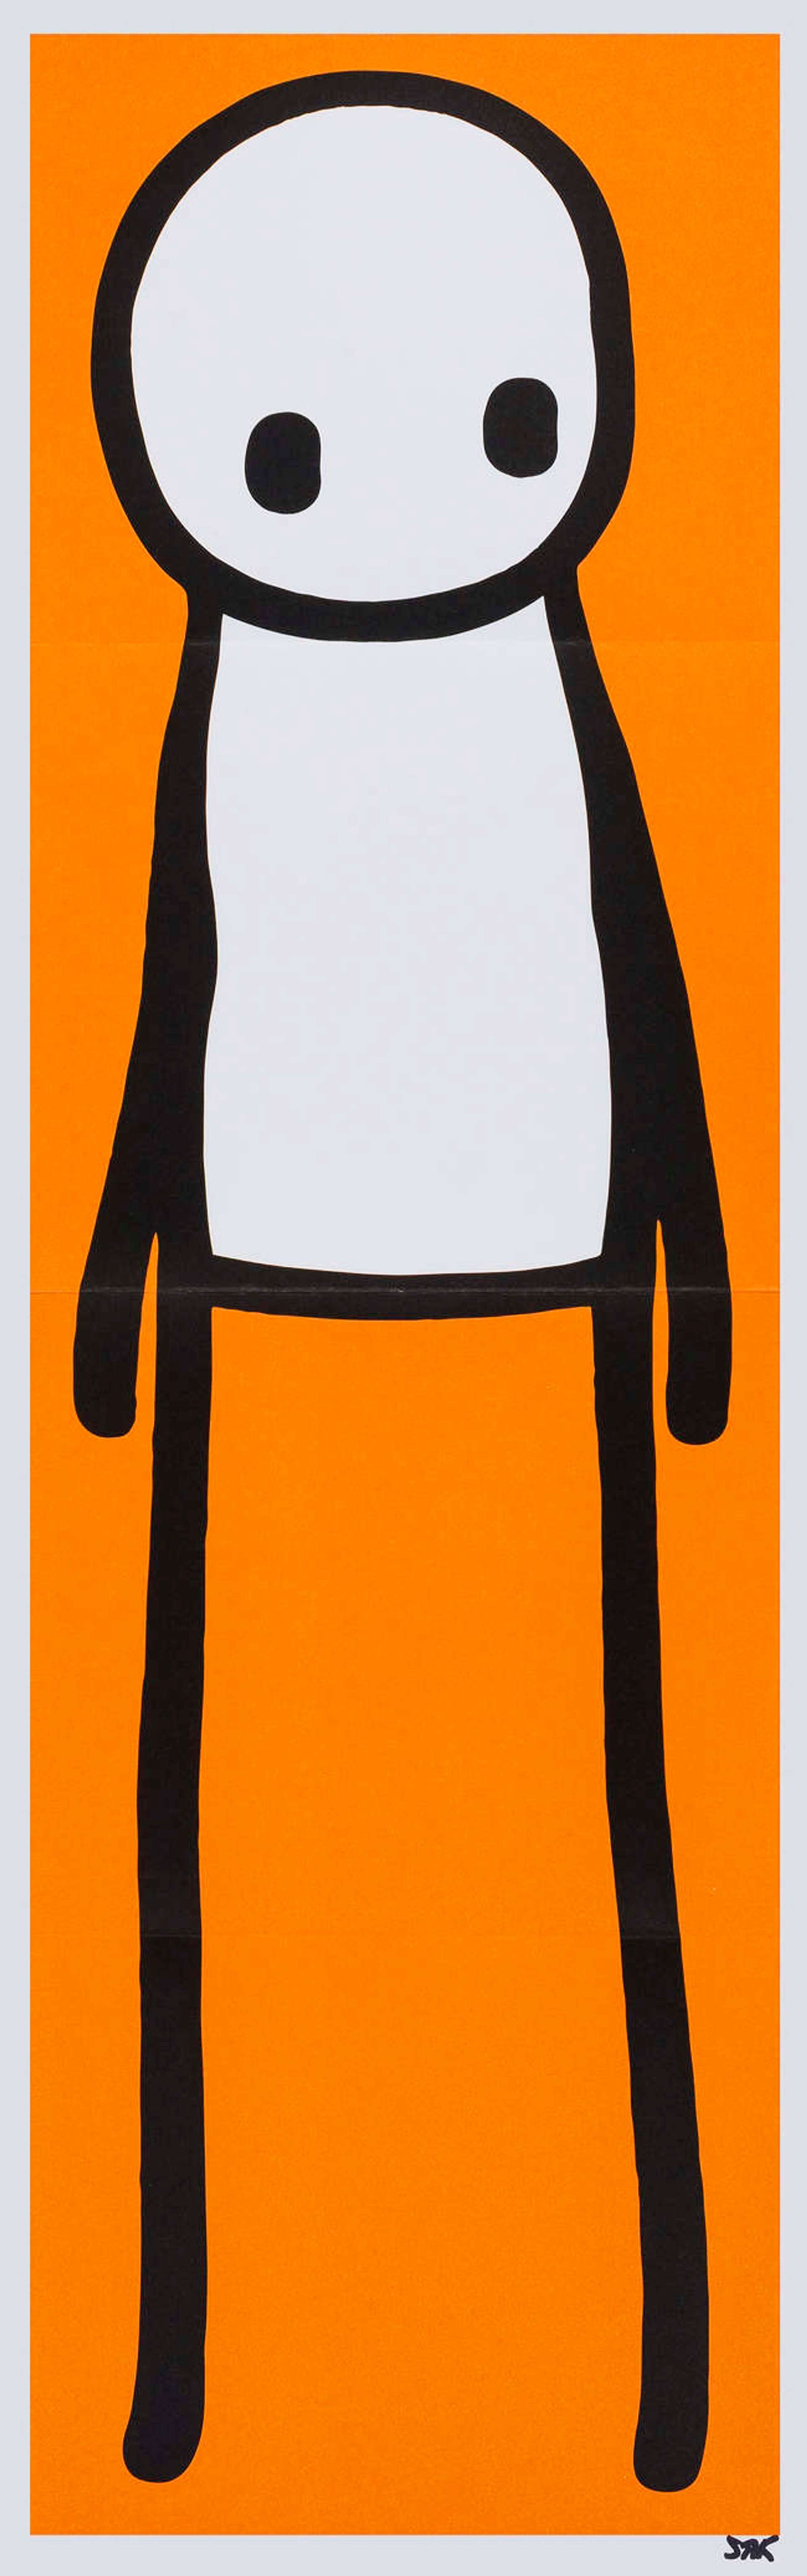 Standing Figure (orange) by Stik